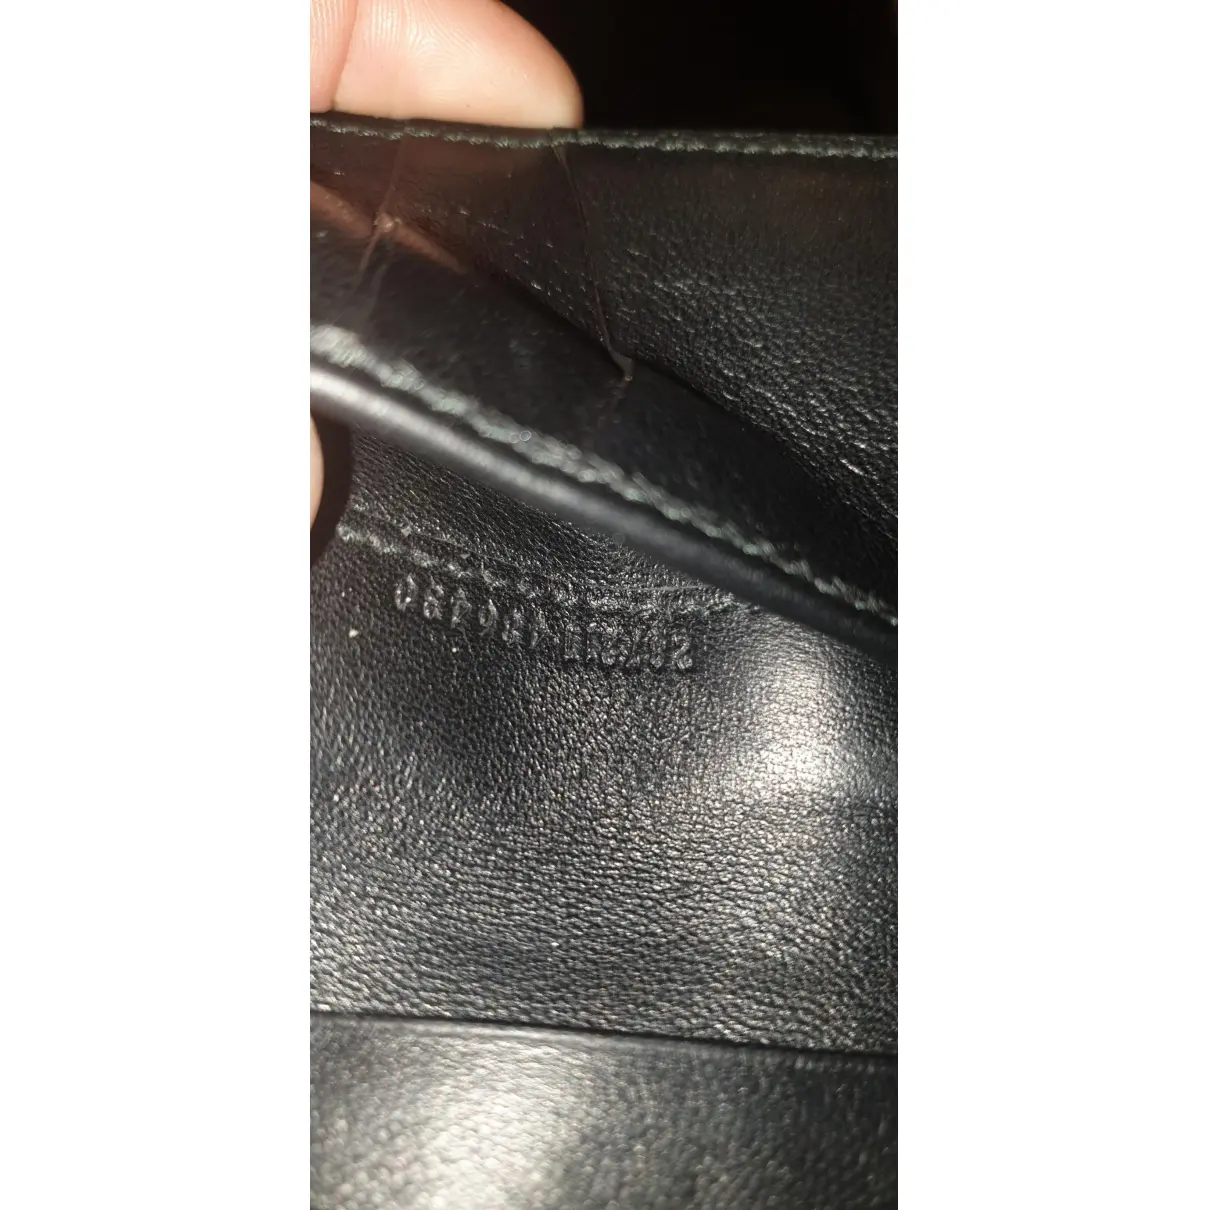 Leather card wallet Alexander McQueen